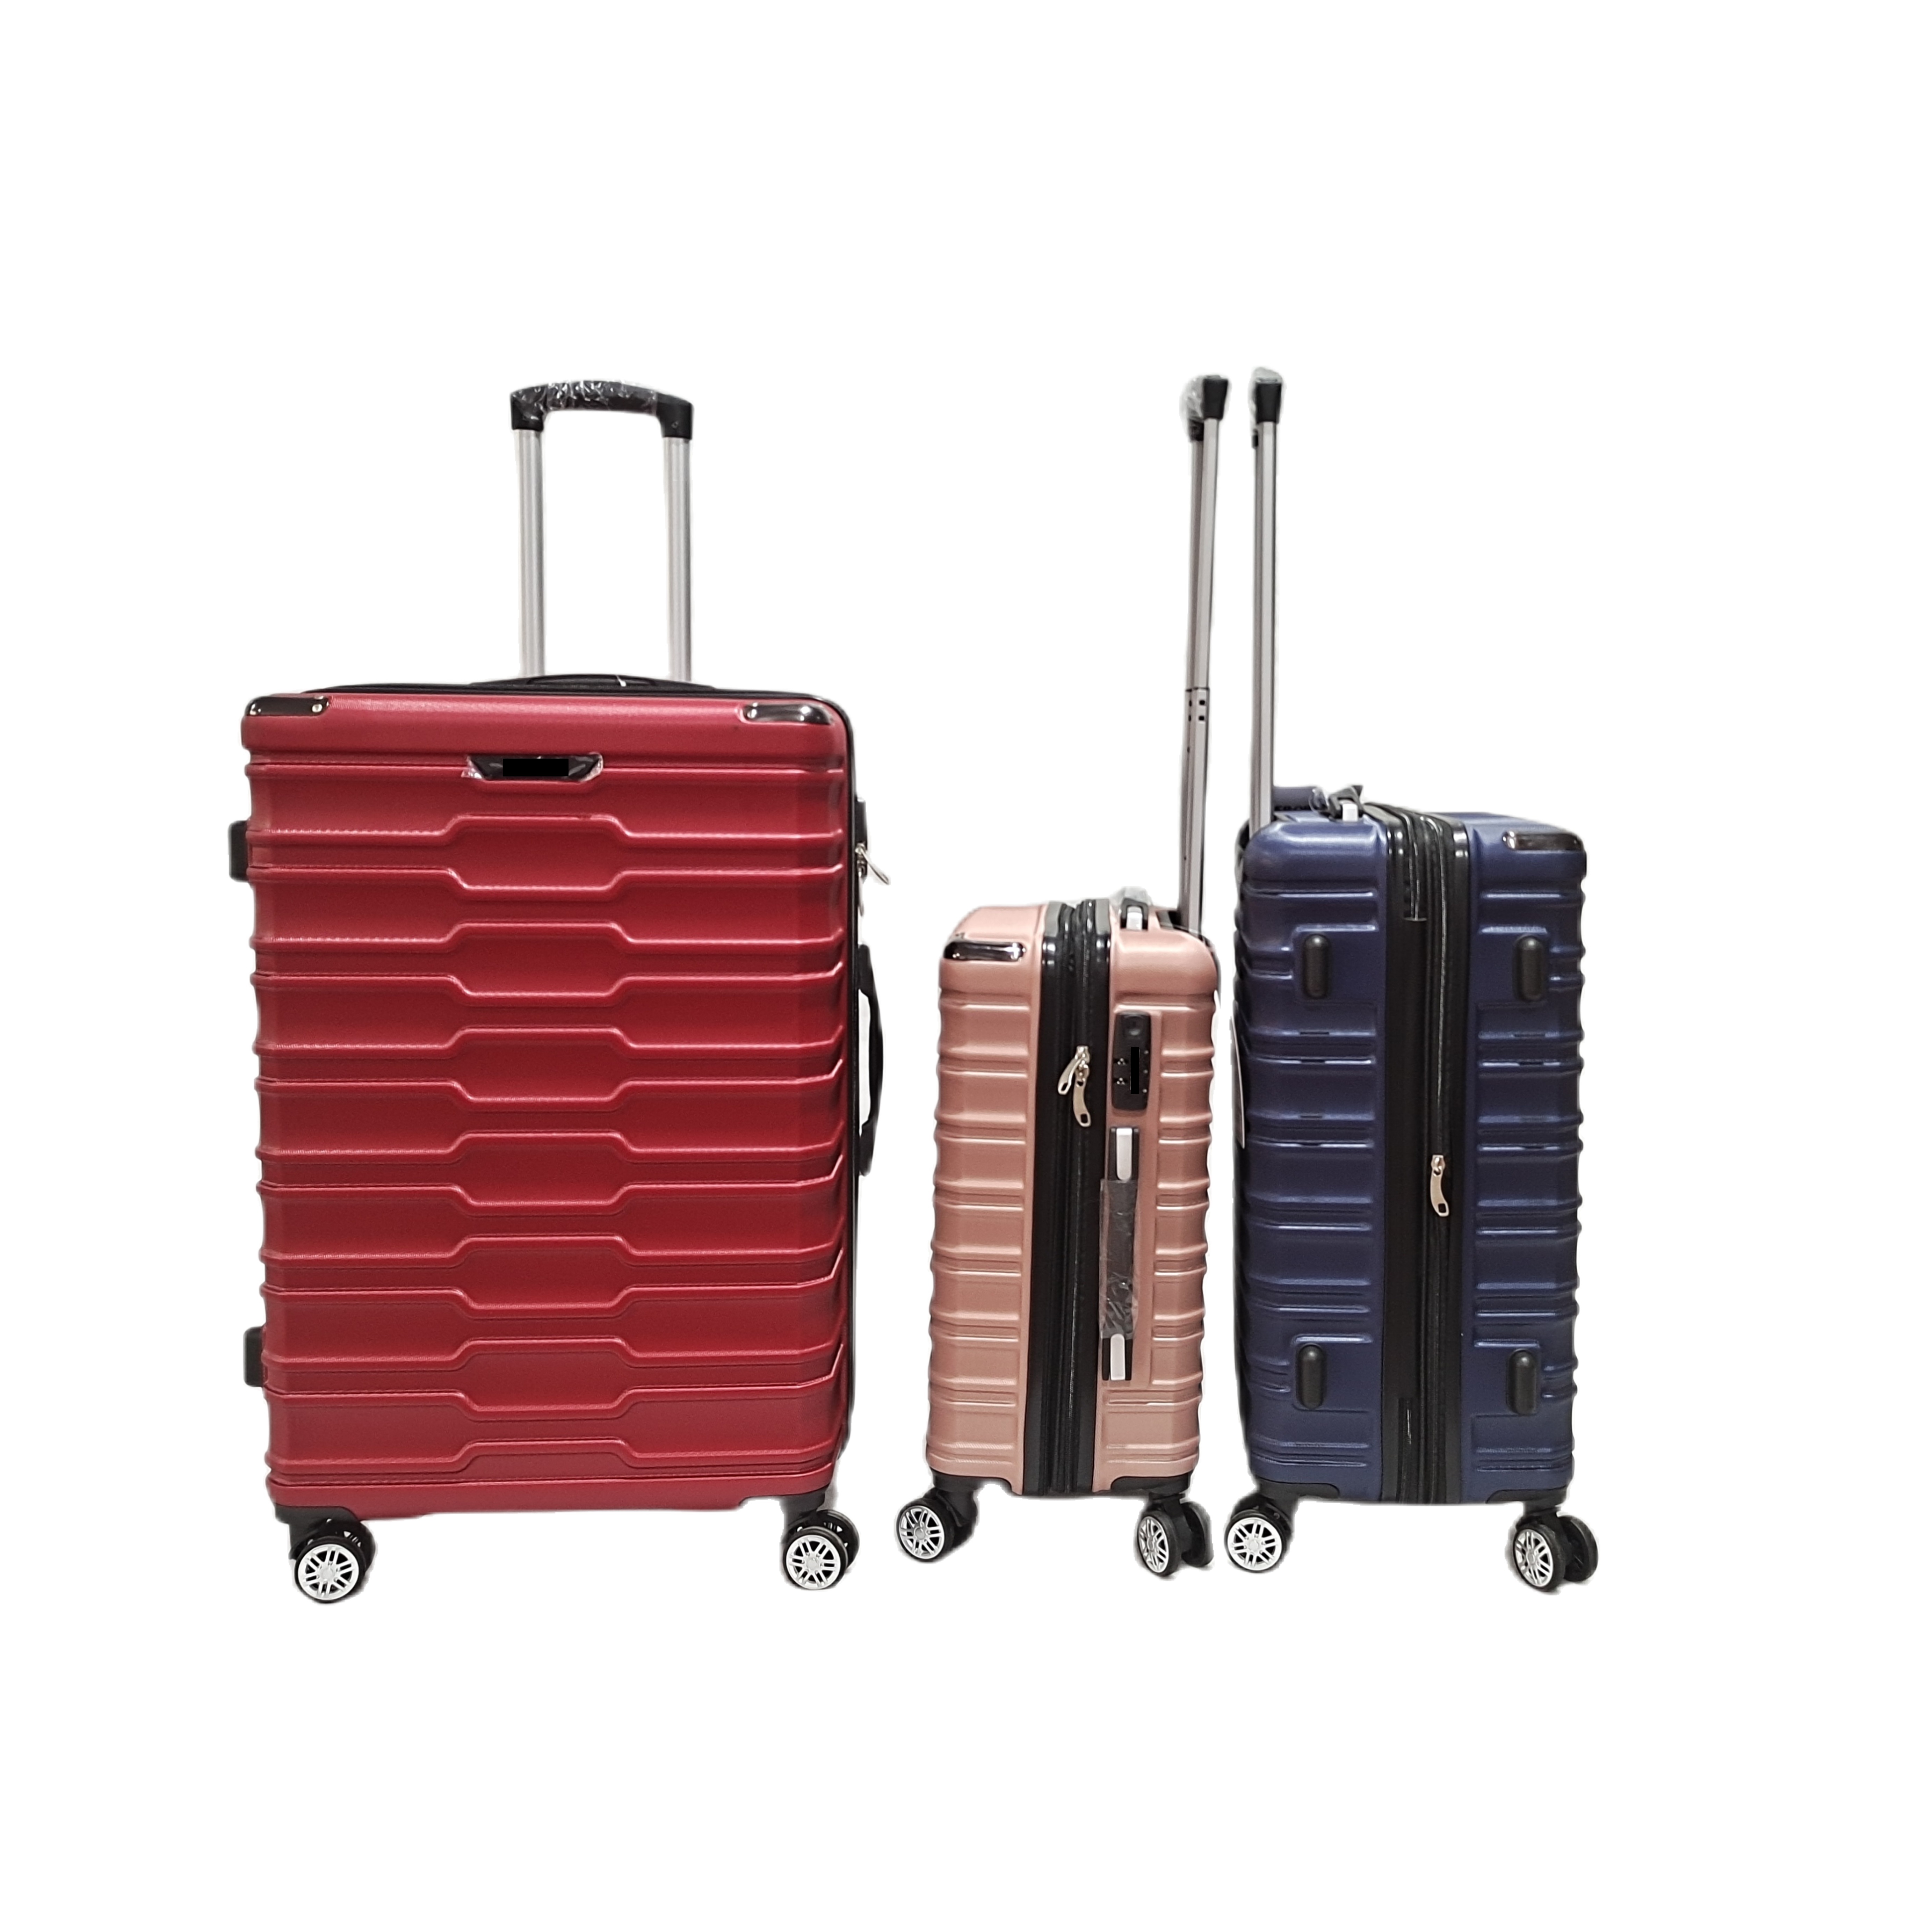 ست چمدان مسافرتی ABS مدل BusinessTrolley